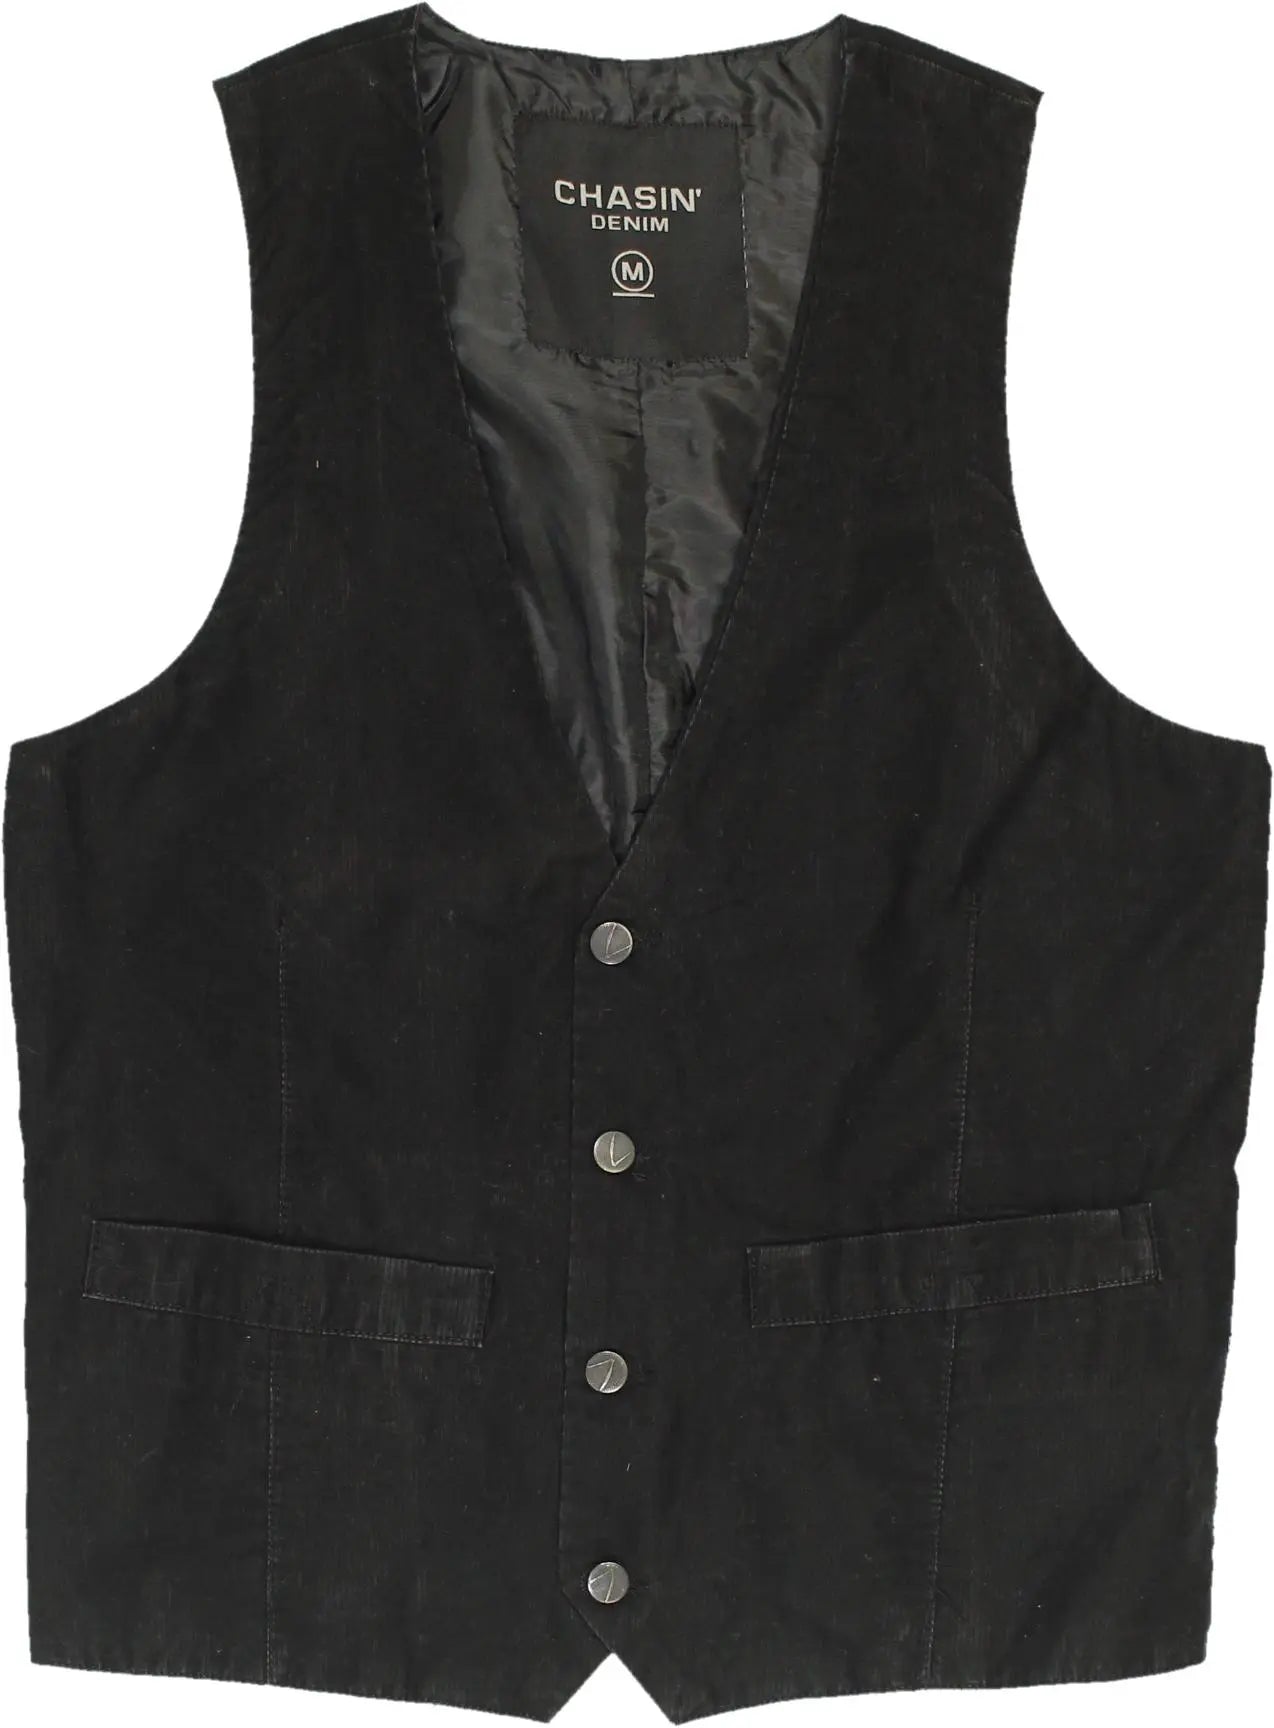 Chasin - Black Denim Gilet- ThriftTale.com - Vintage and second handclothing